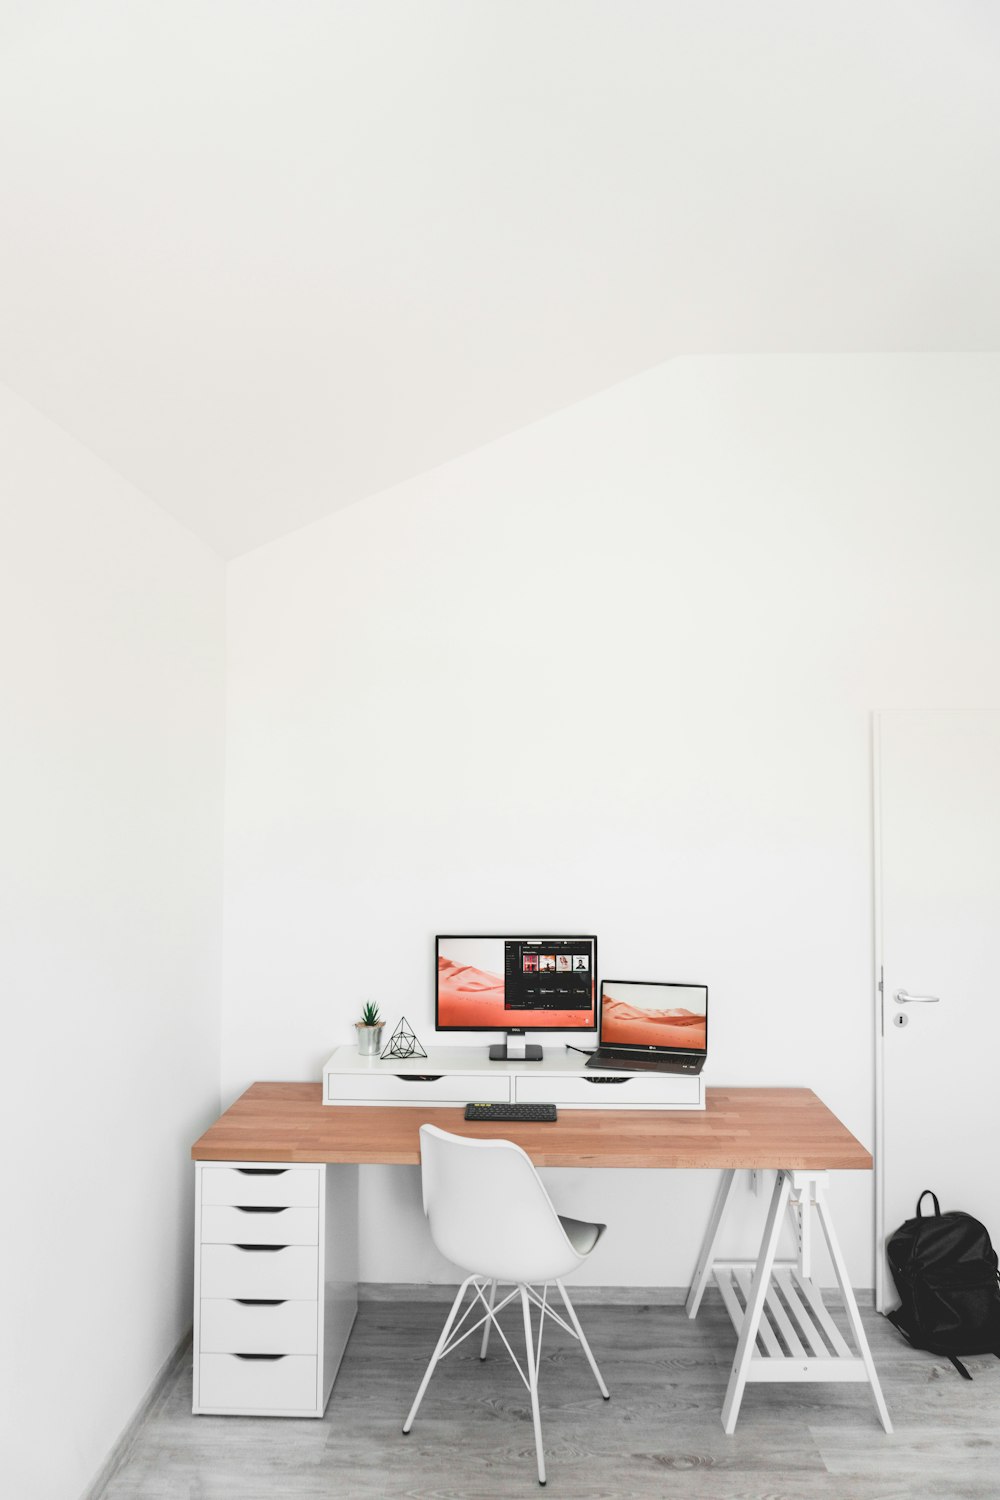 How do I setup my first home office?